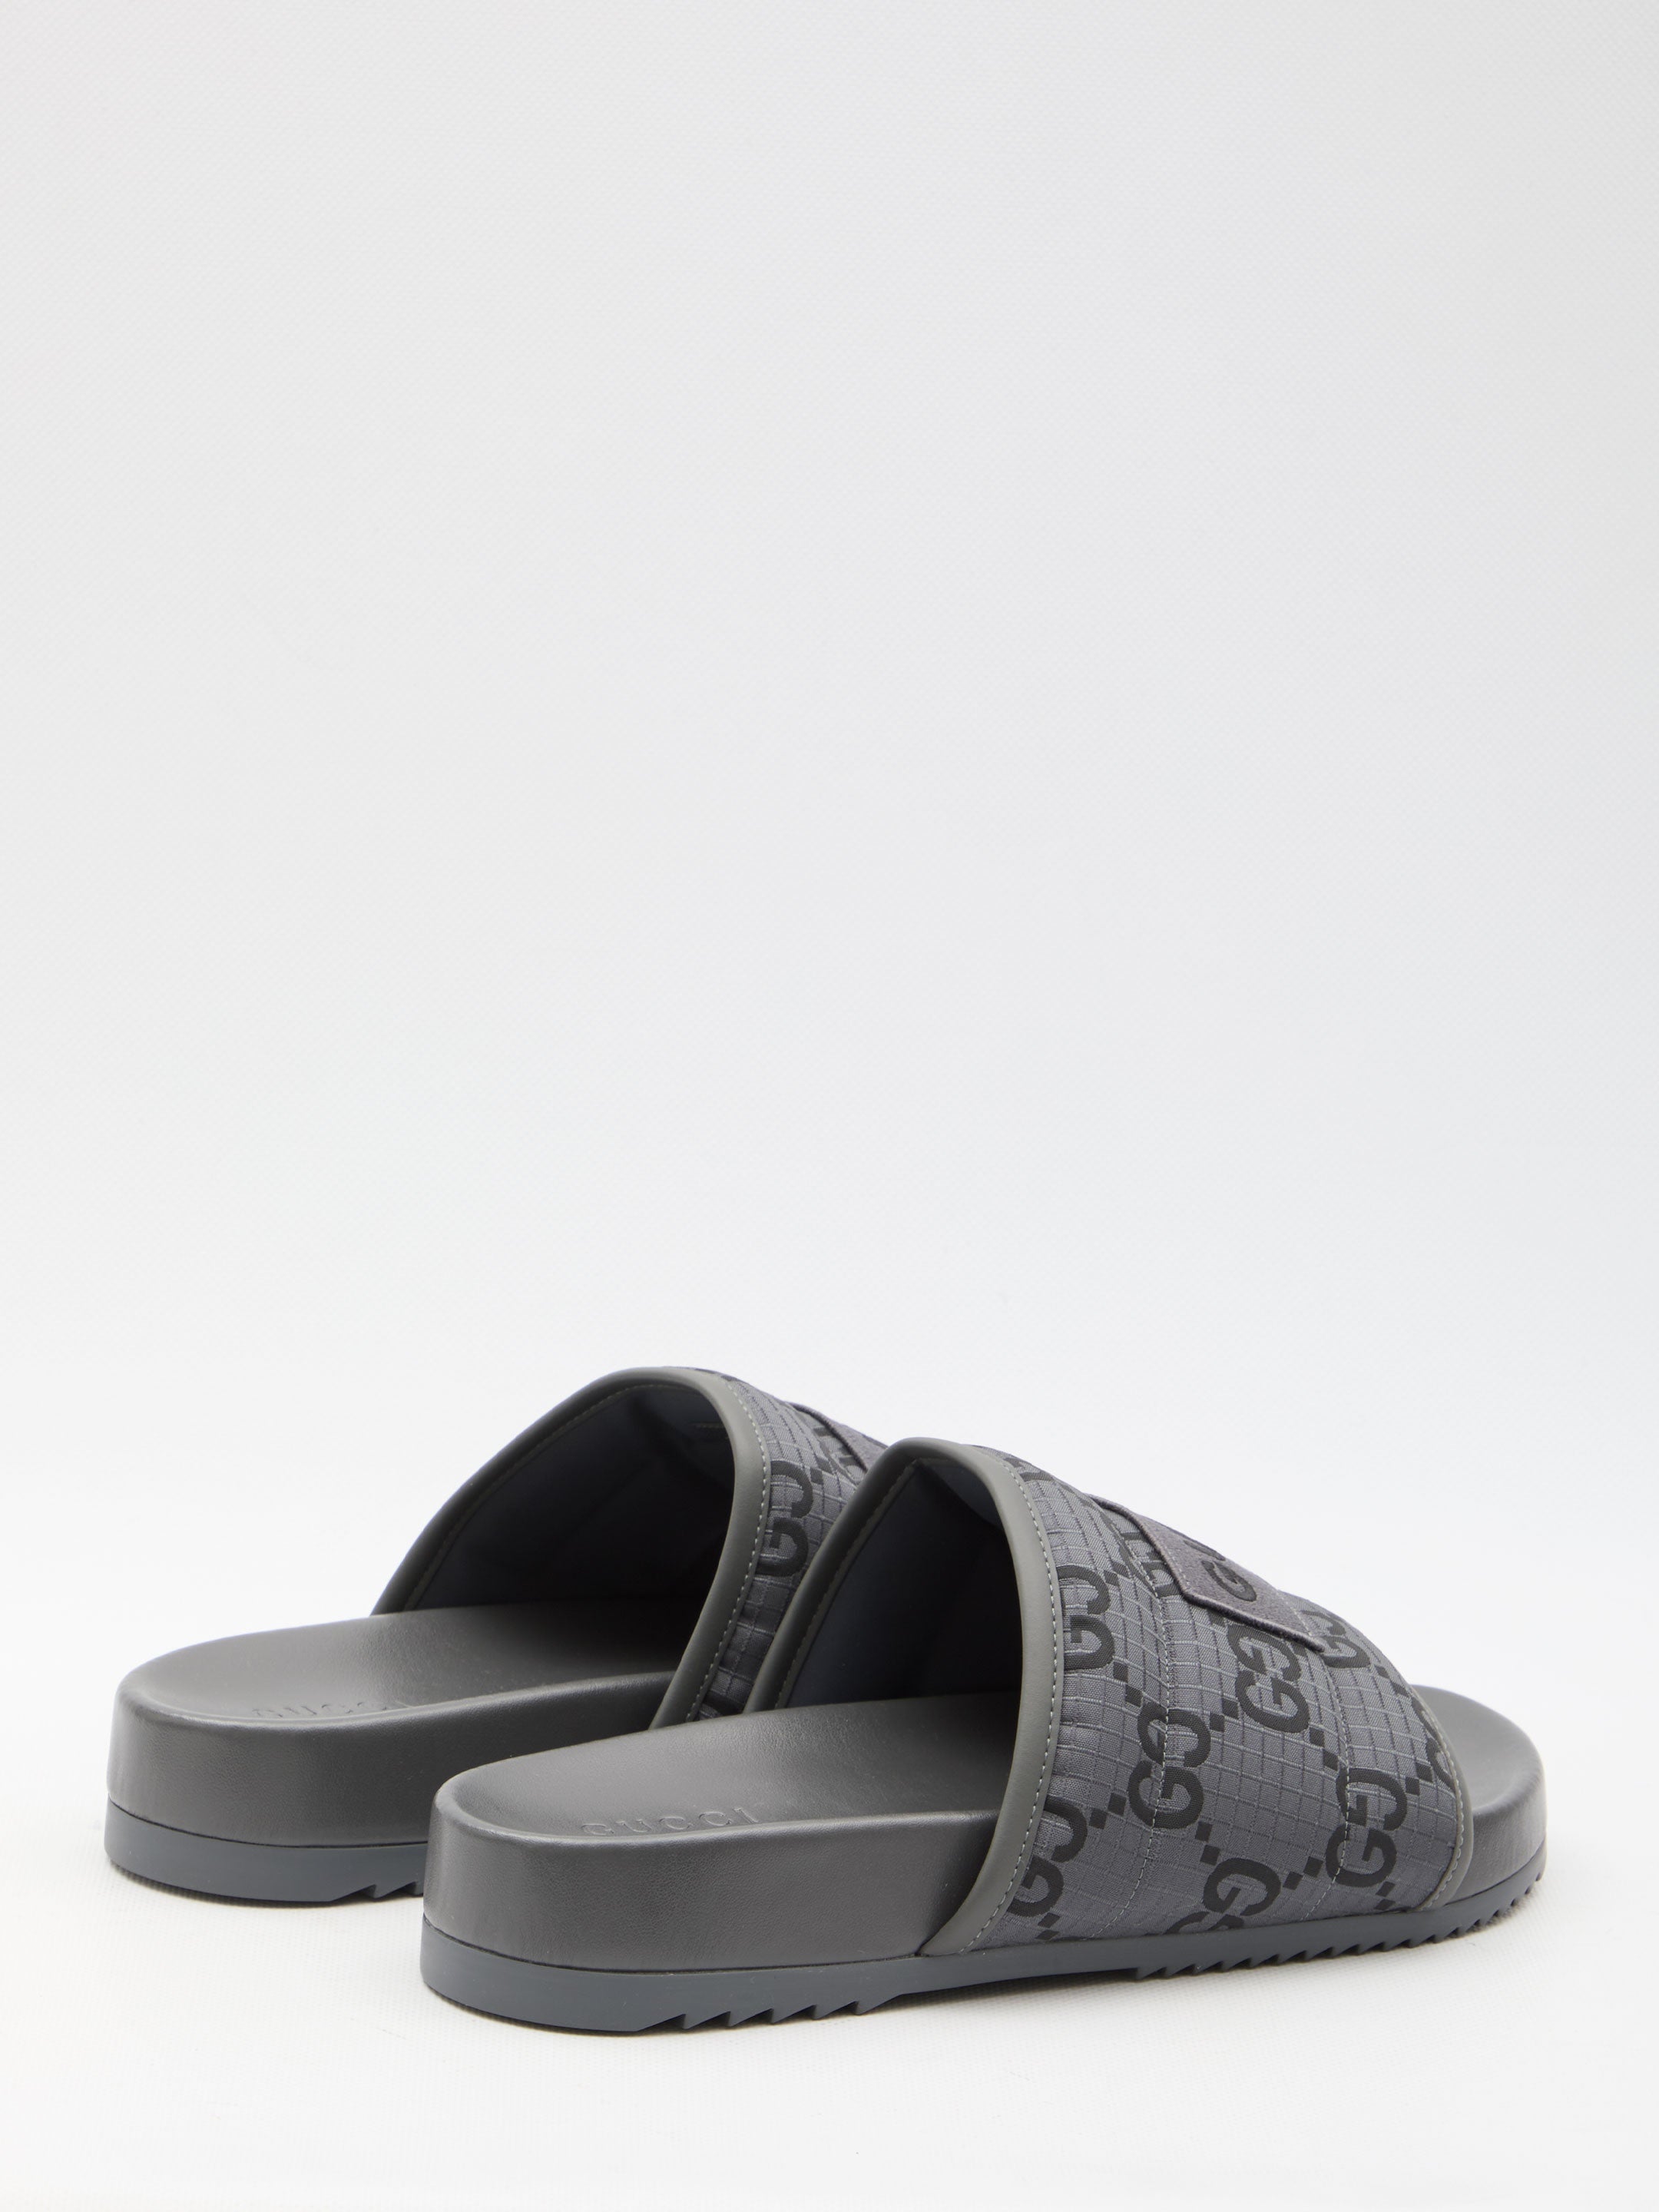 Slider sandals with GG motif